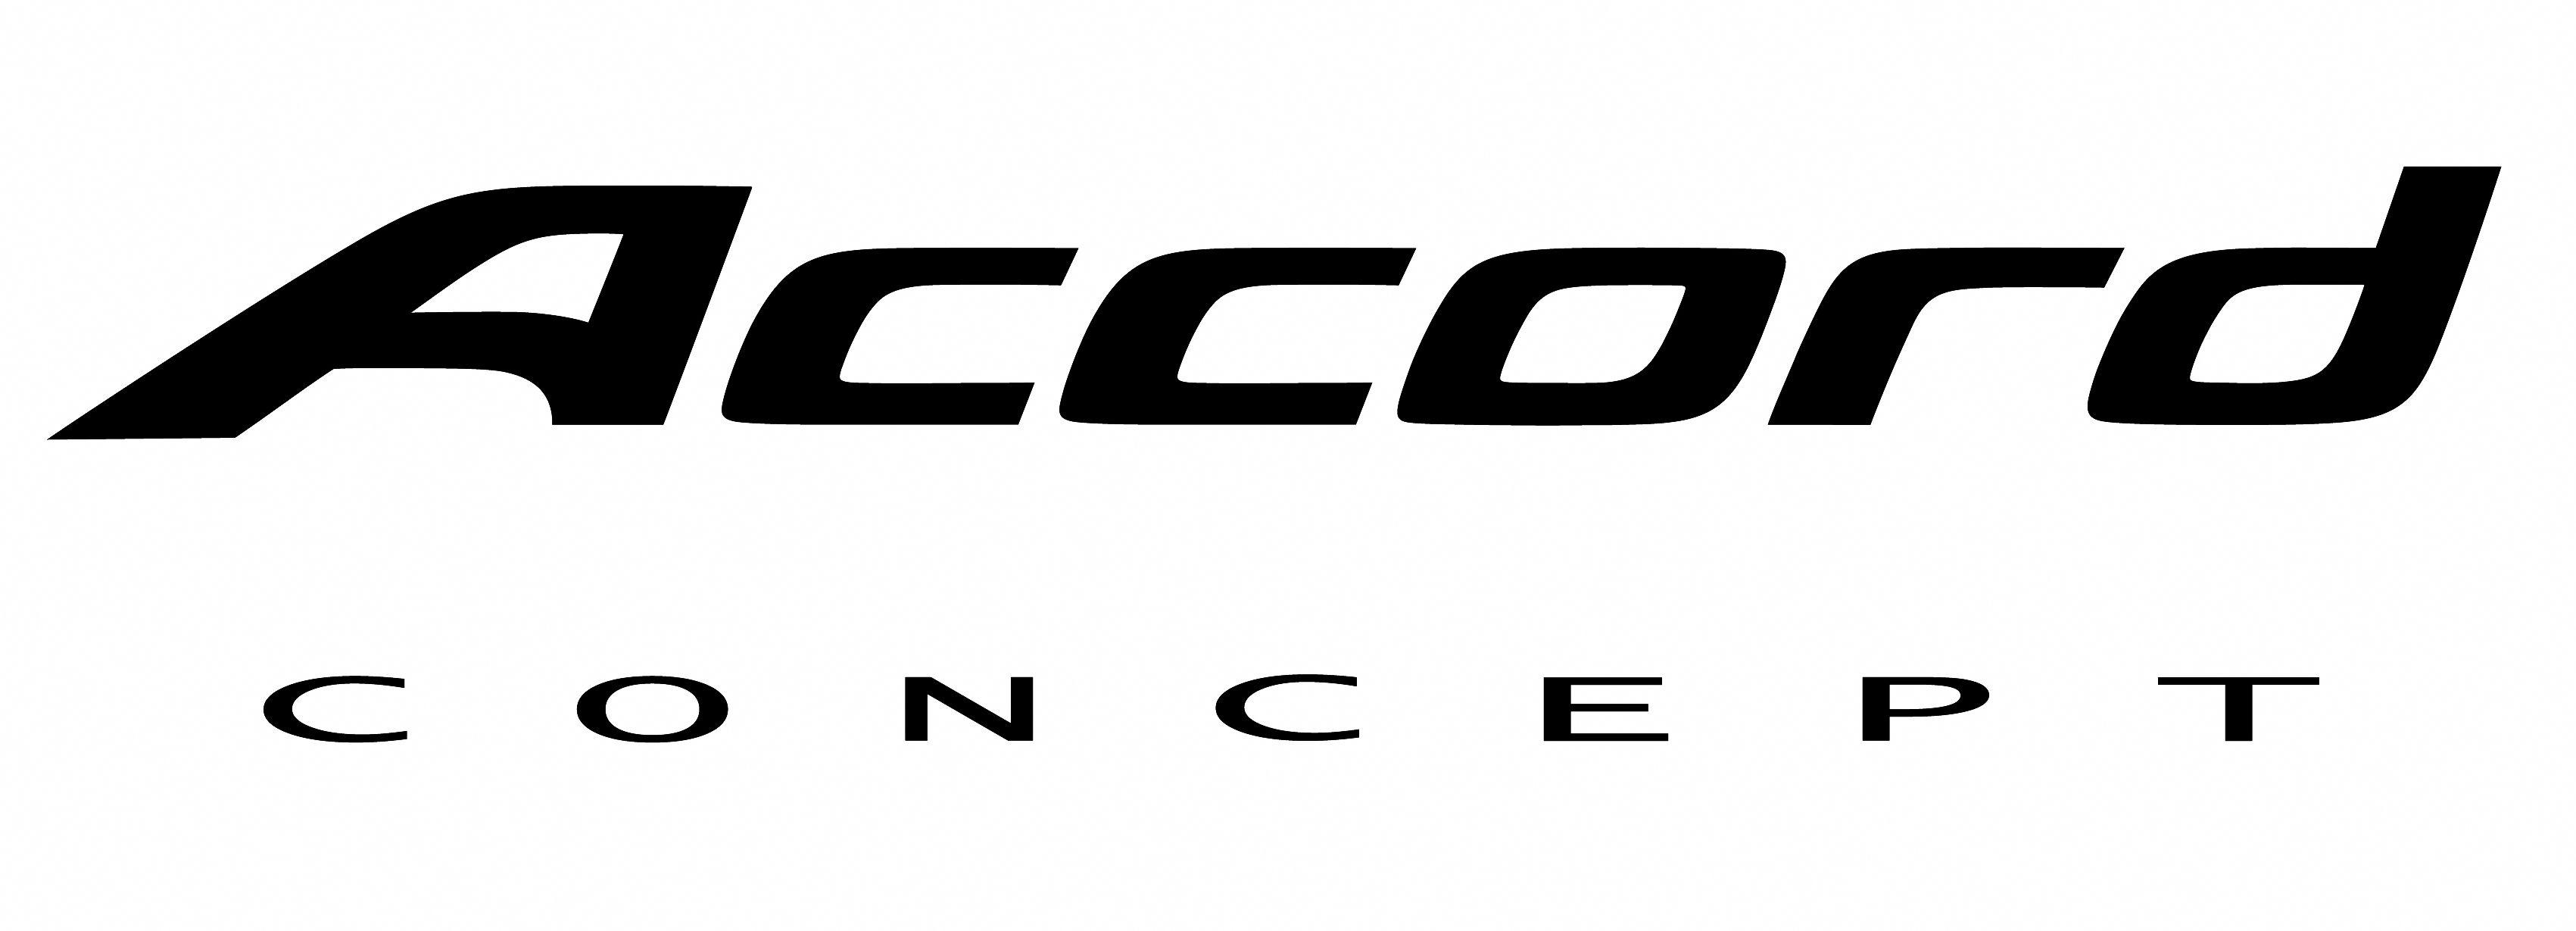 Honda Accord Logo - Honda accord Logos